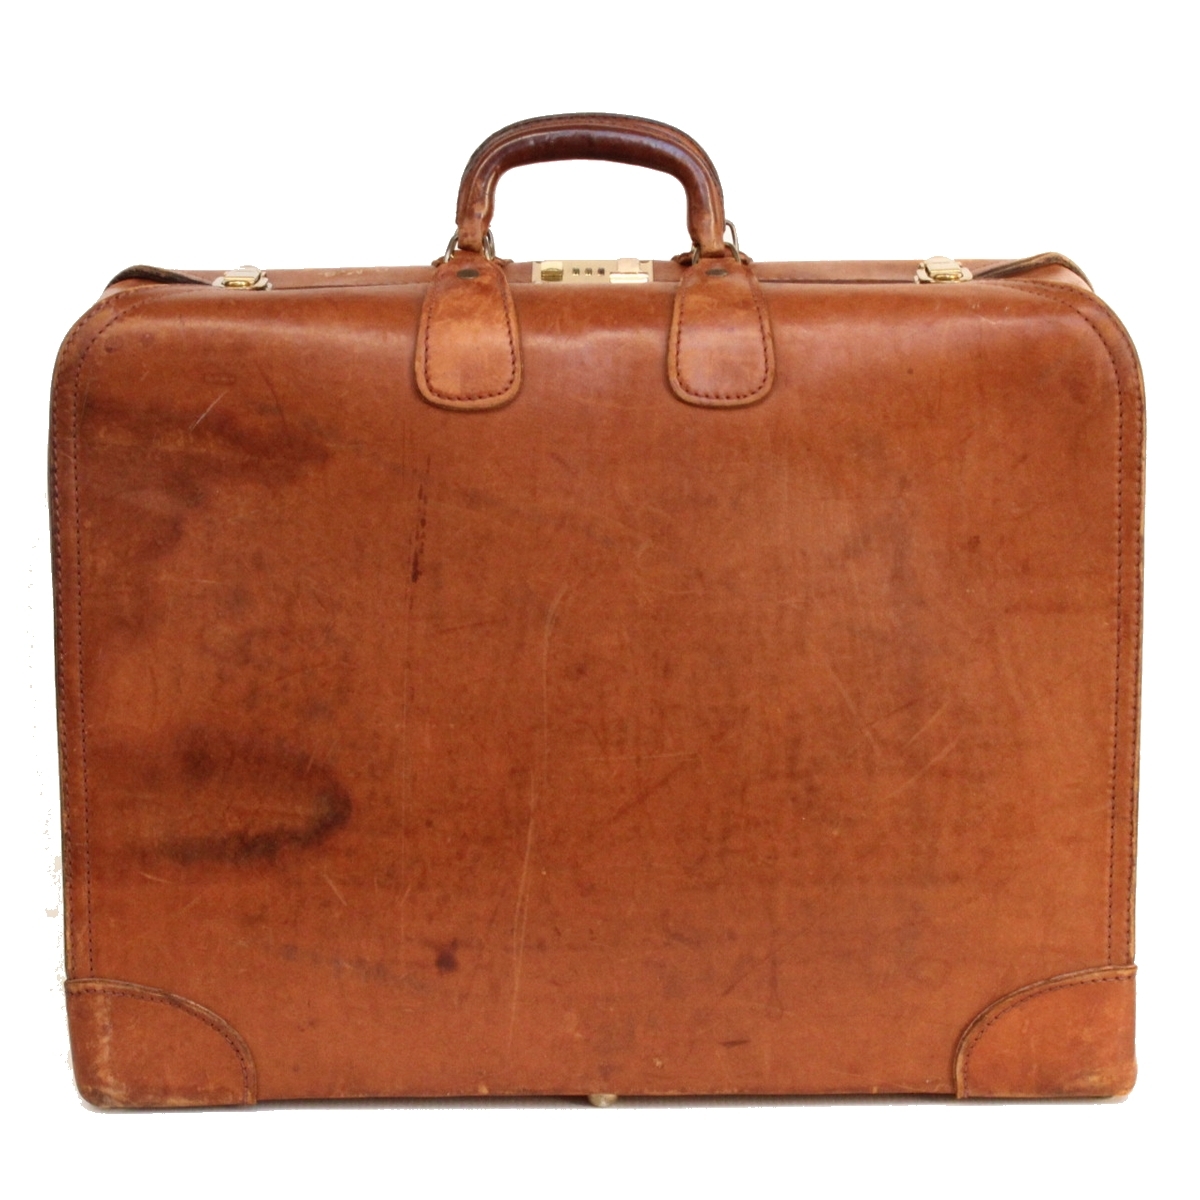 (89312)Vintage 本革レザー トランク スーツケース ヴィンテージ鞄 LUGGAGE CASE (レトロ アンティーク オールド旅行 鞄 収納インテリア)_画像2